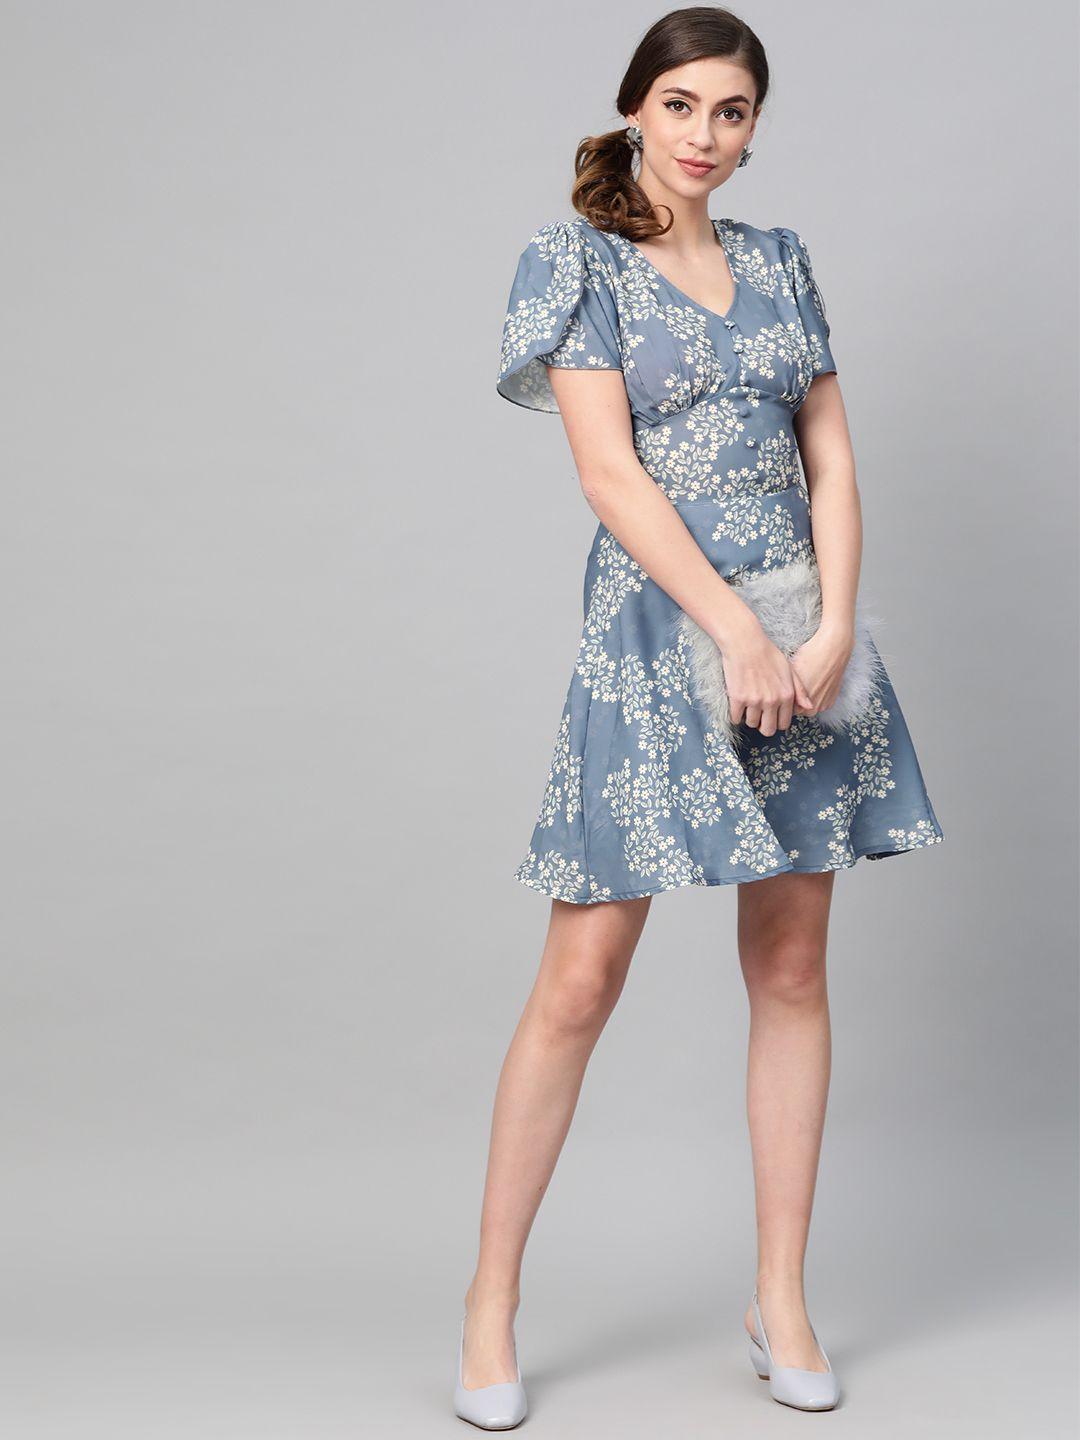 SASSAFRAS Blue & Off-White Floral Print Empire Dress